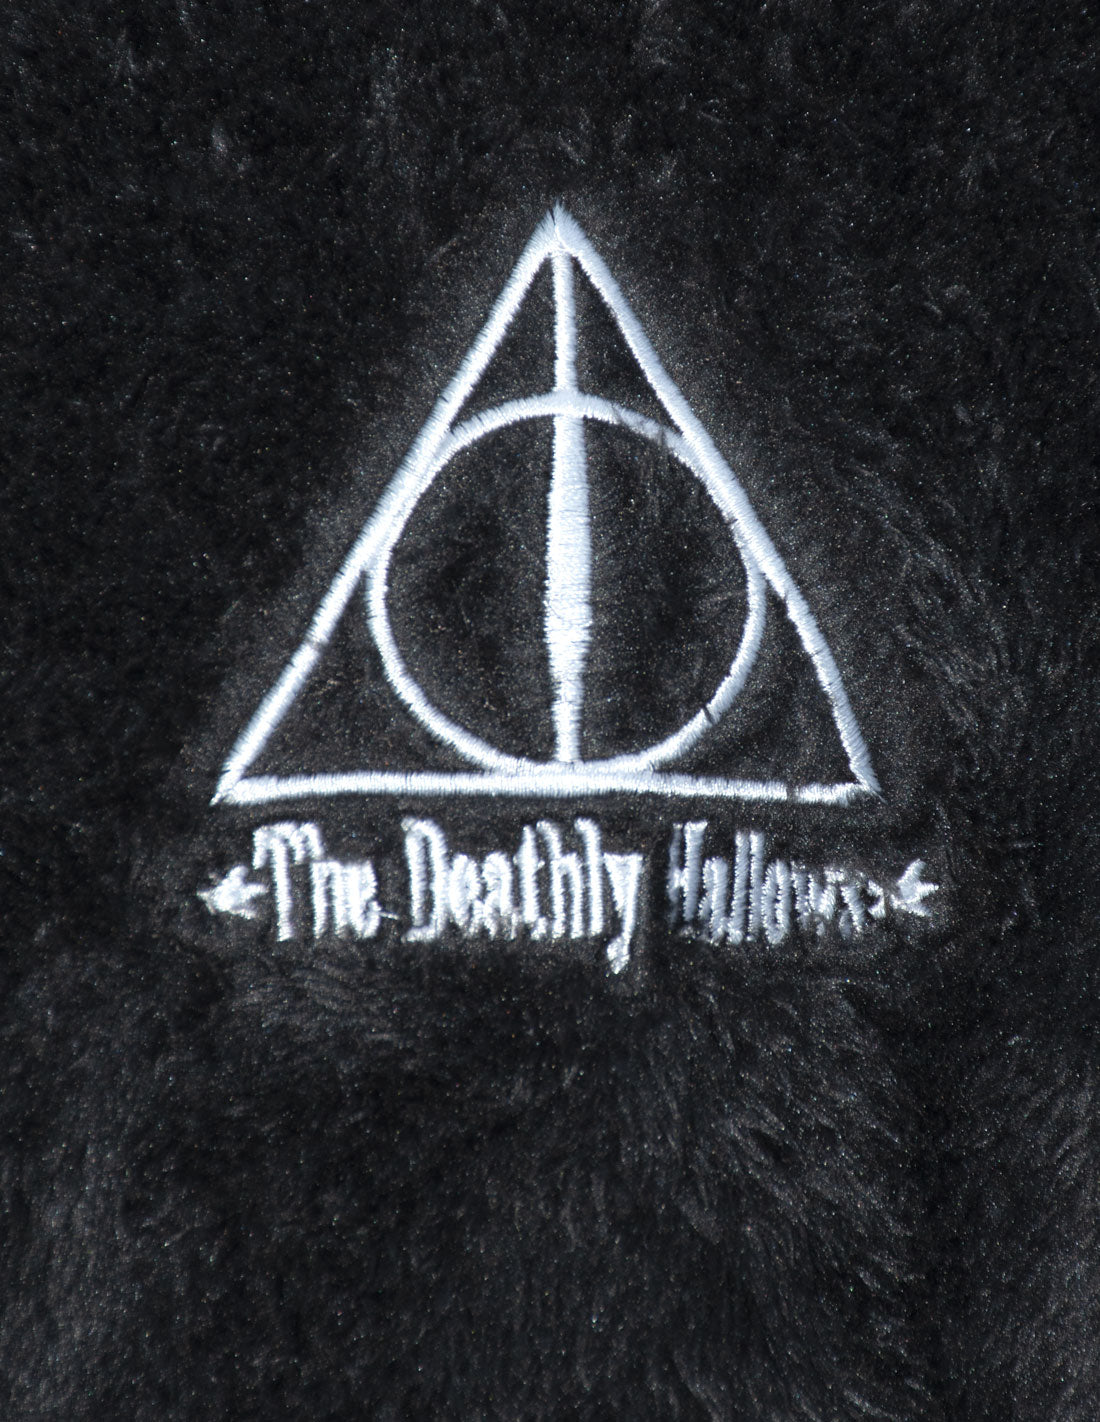 Harry Potter Plush Sweatshirt - The Deathly Hallows